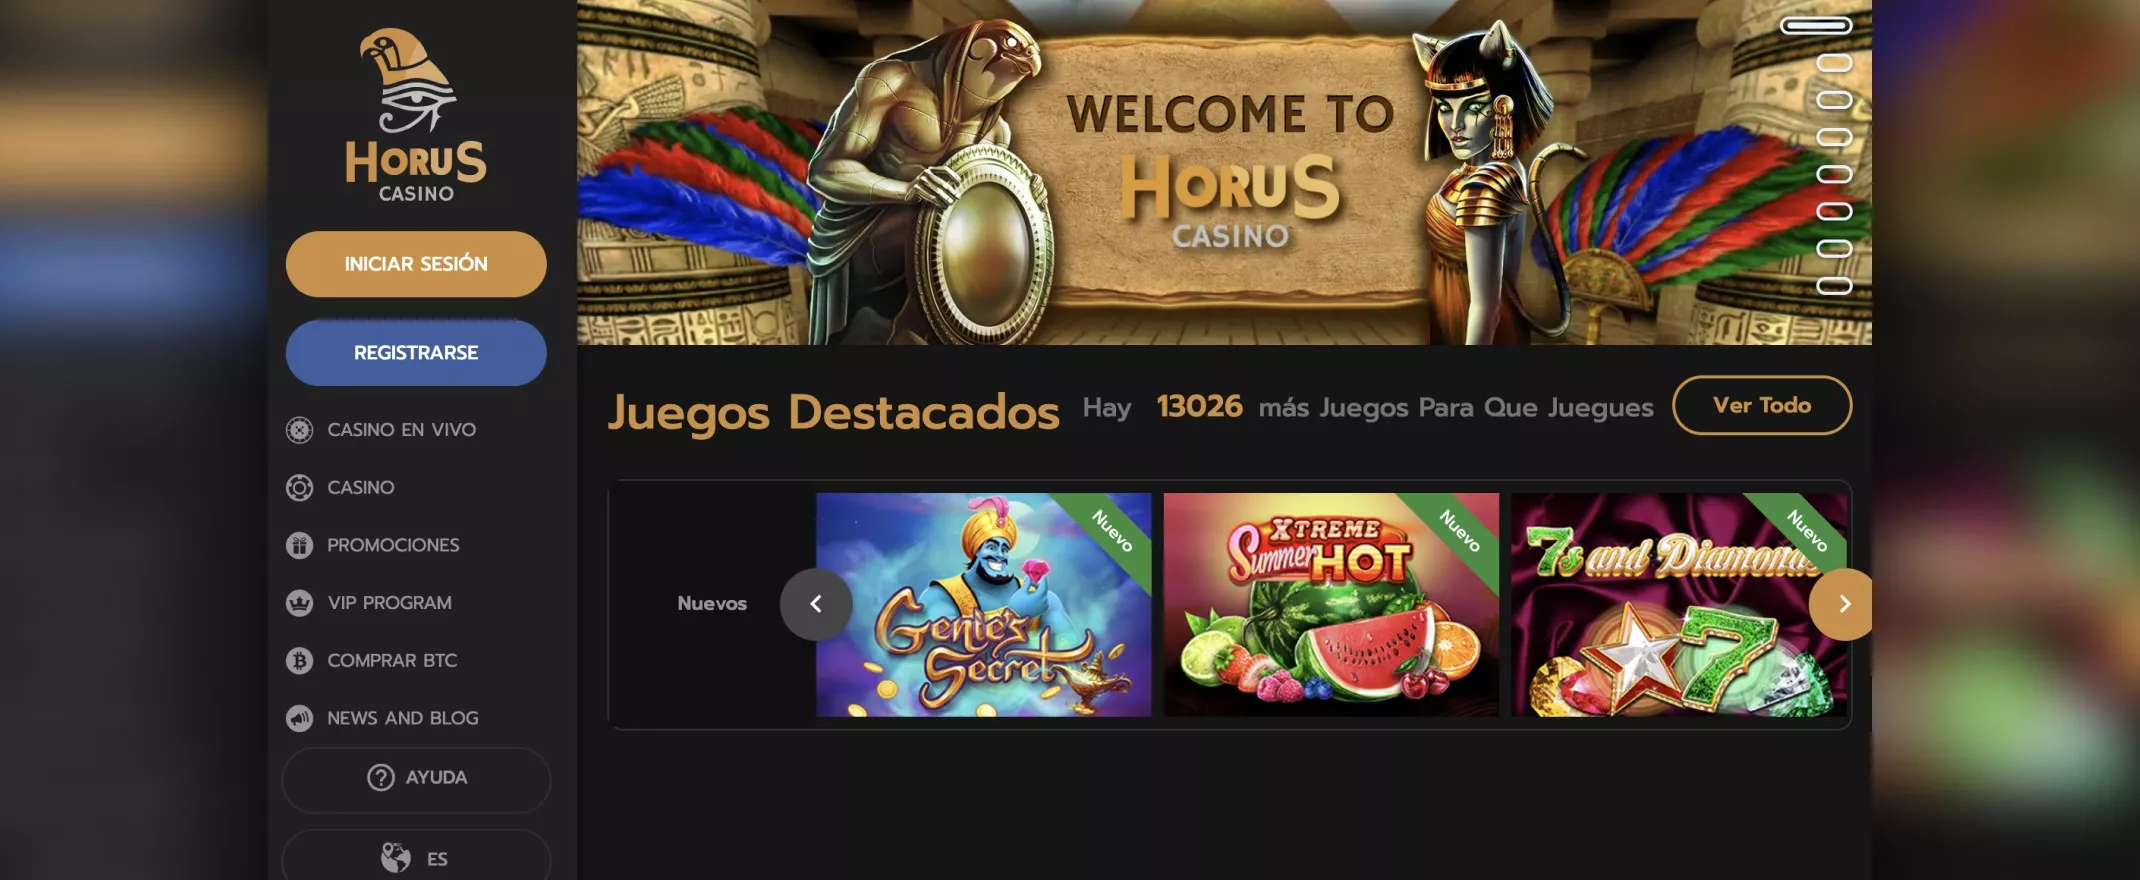 Homepage de Horus Casino